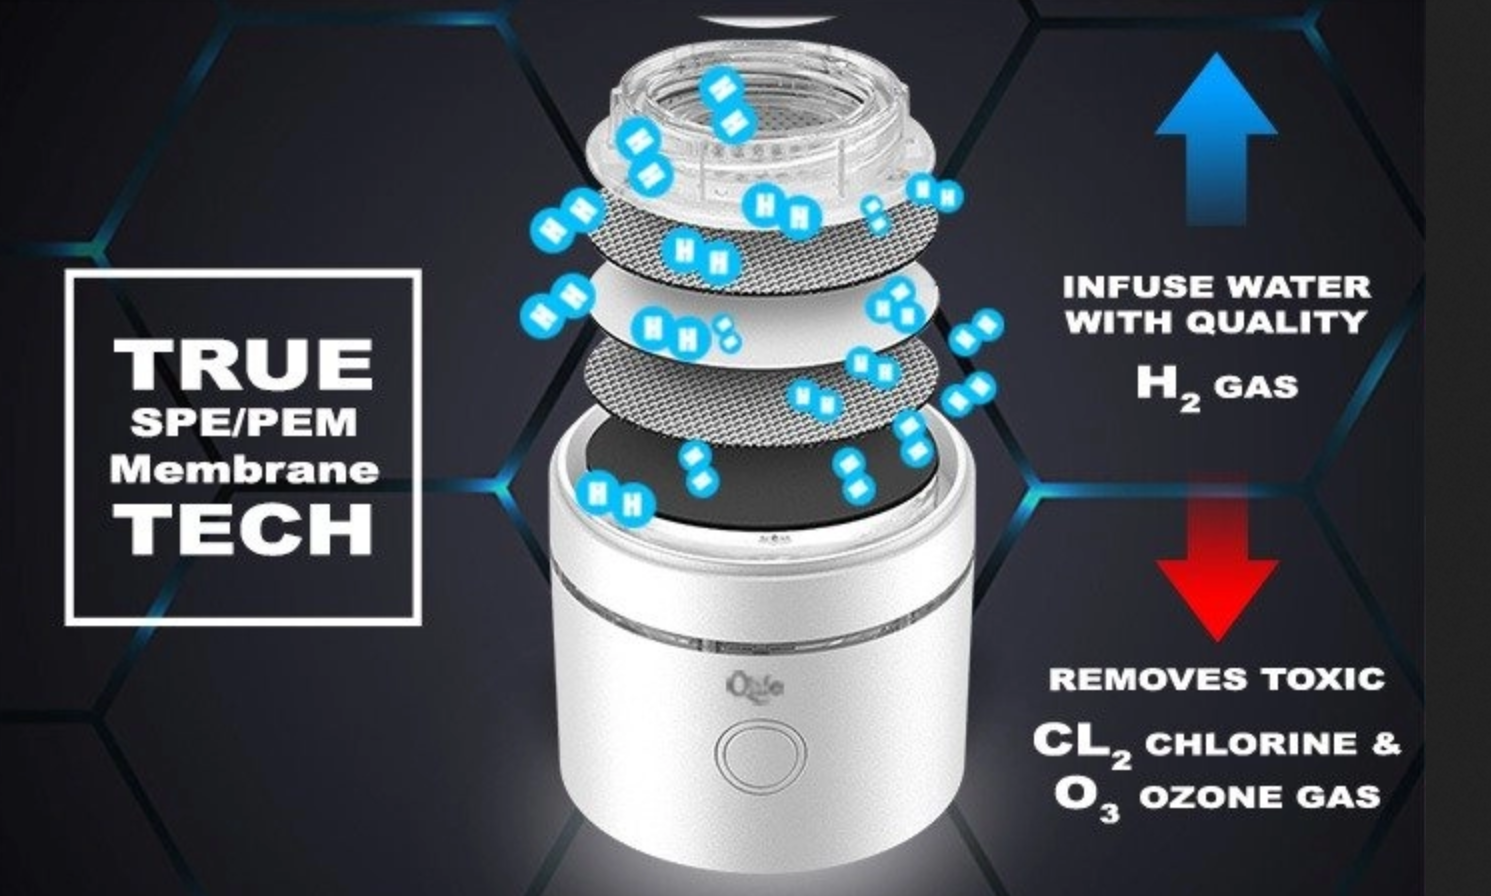 Q-life Portable Water Ionizer